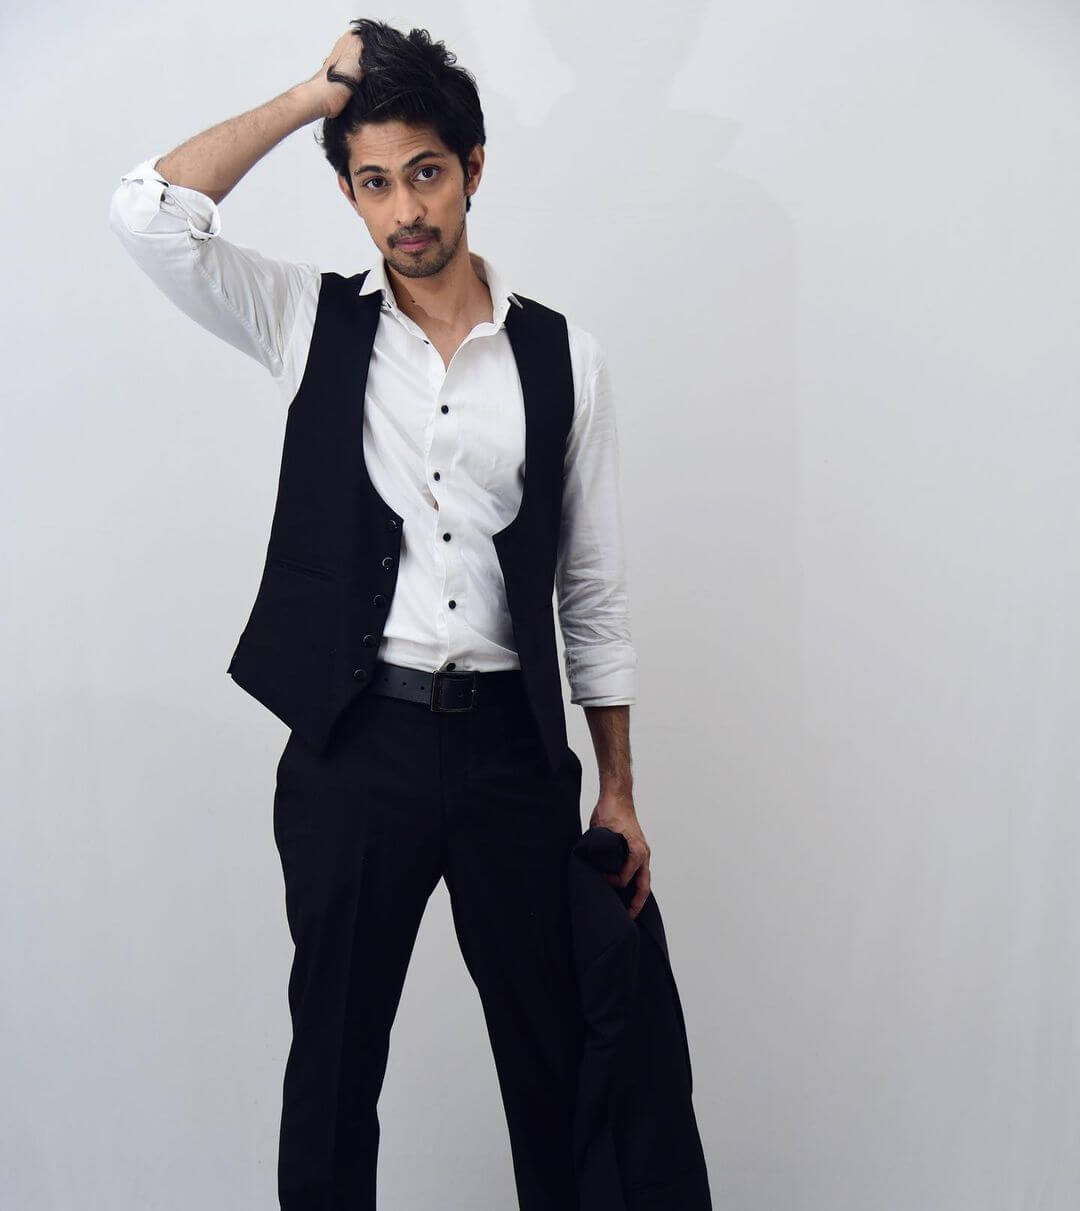 Actor Tushar Pandey stylish look